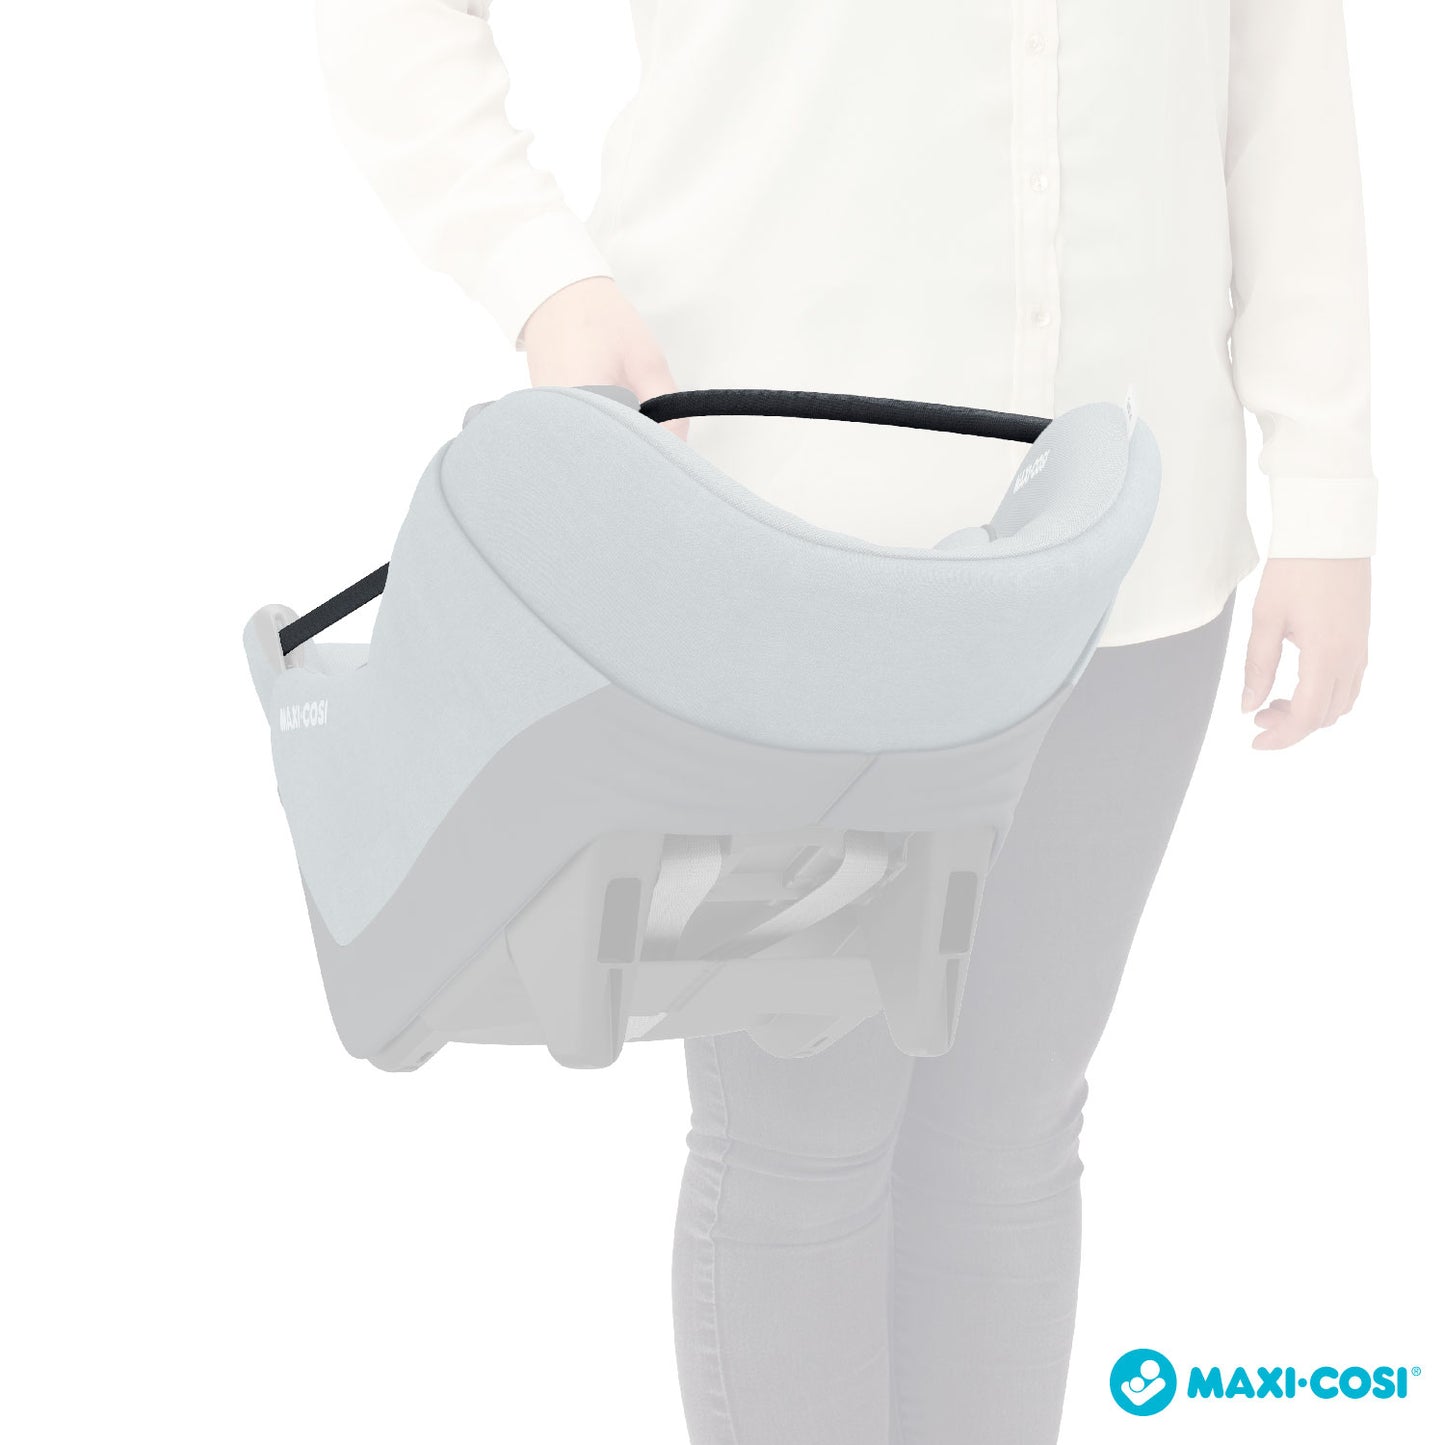 Maxi Cosi - Shoulder bag for Coral Black